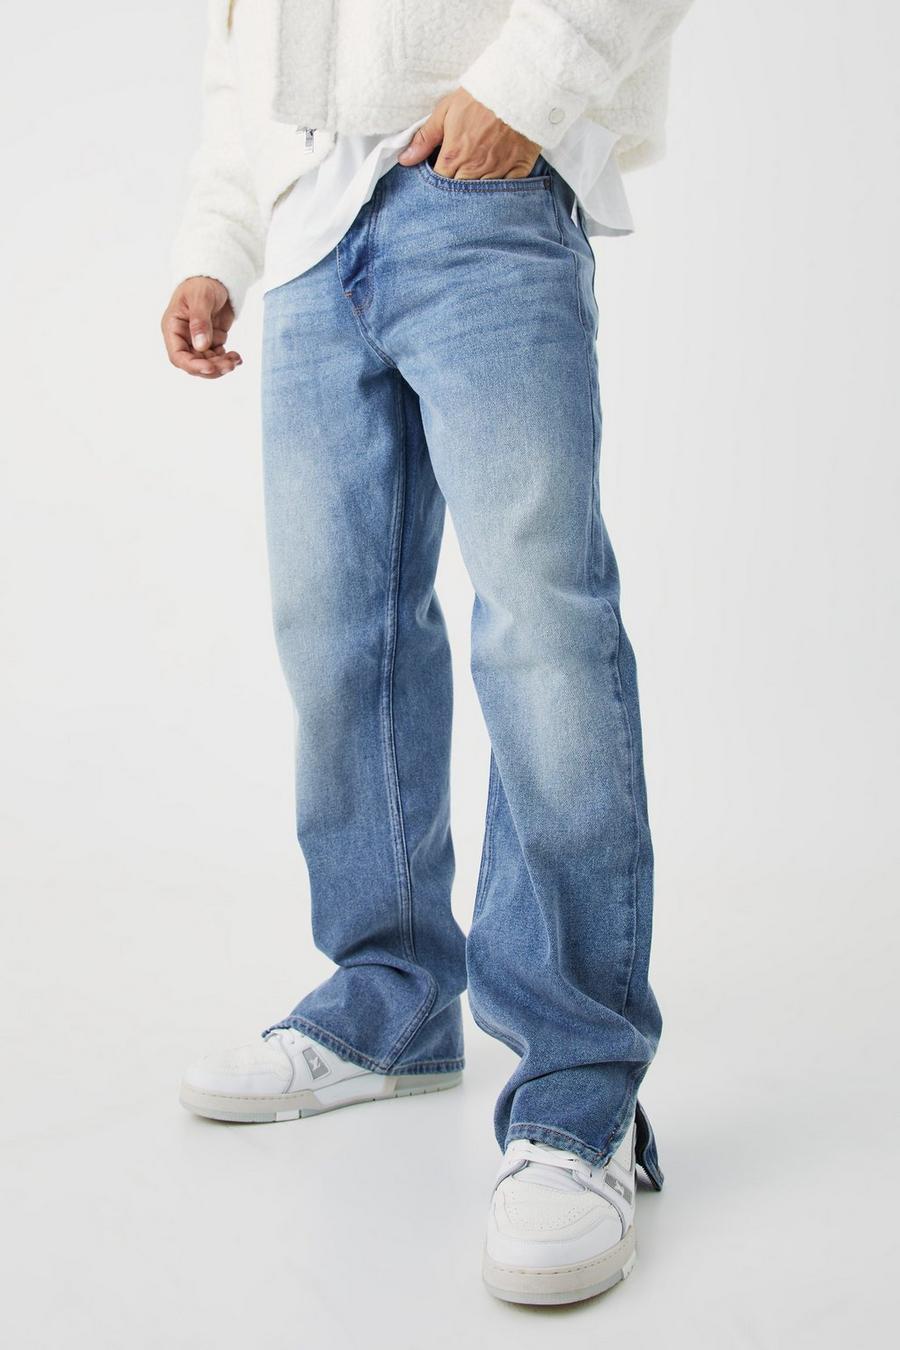 Jeans rilassati in denim rigido con zip sul fondo, Antique blue